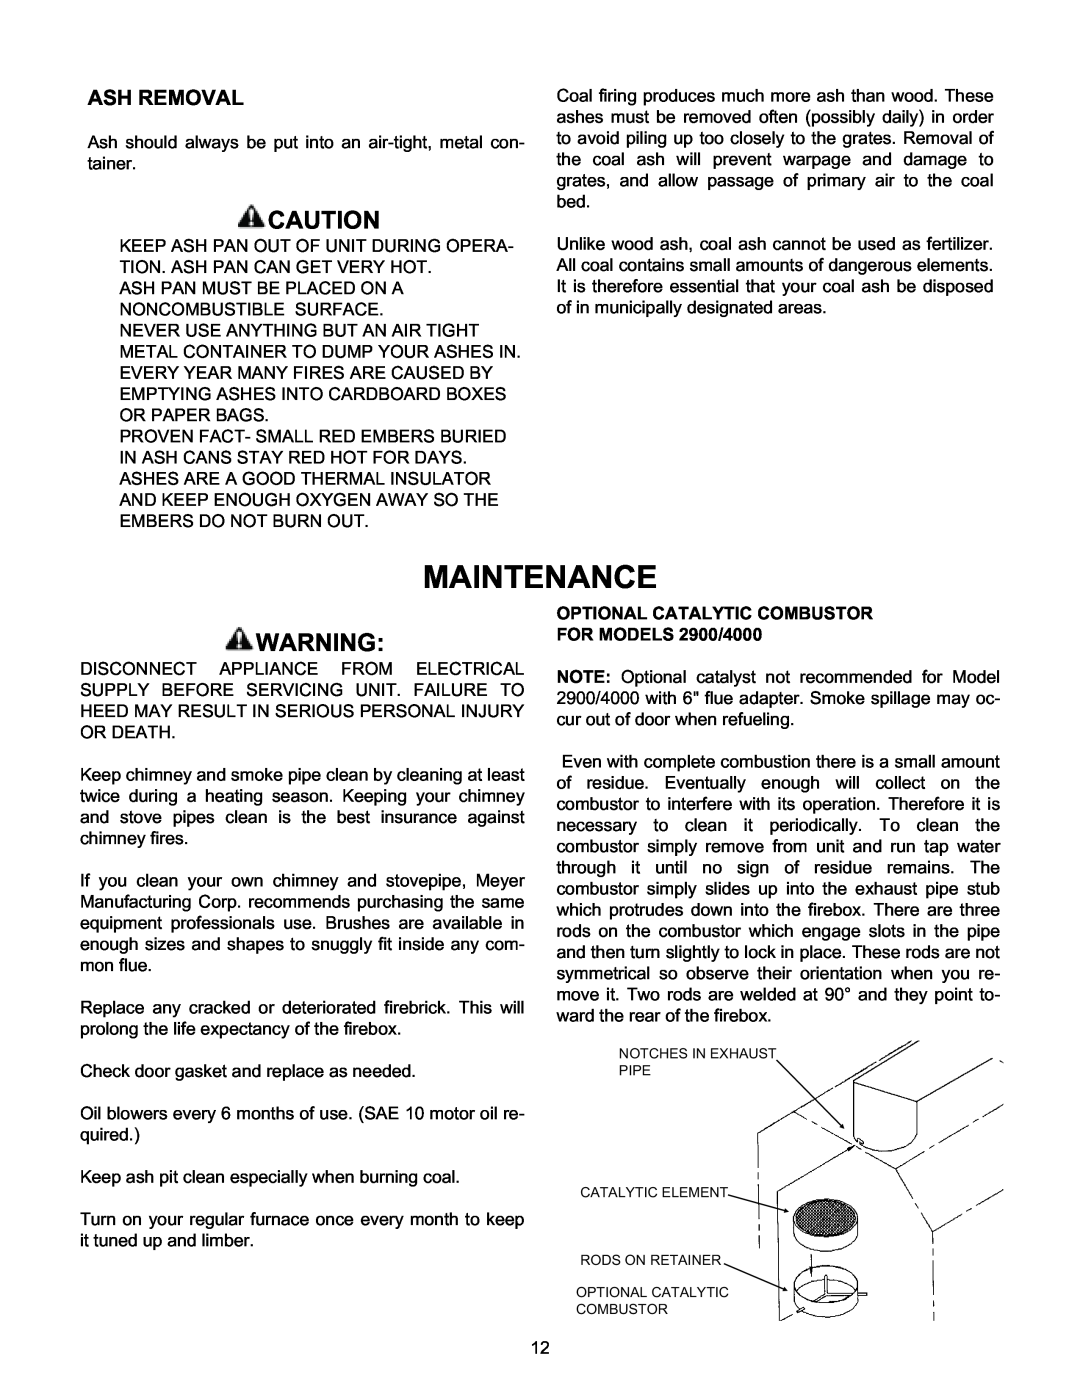 Meyer 526 manual Maintenance, OPTIONAL CATALYTIC COMBUSTOR FOR MODELS 2900/4000, Ash Removal 